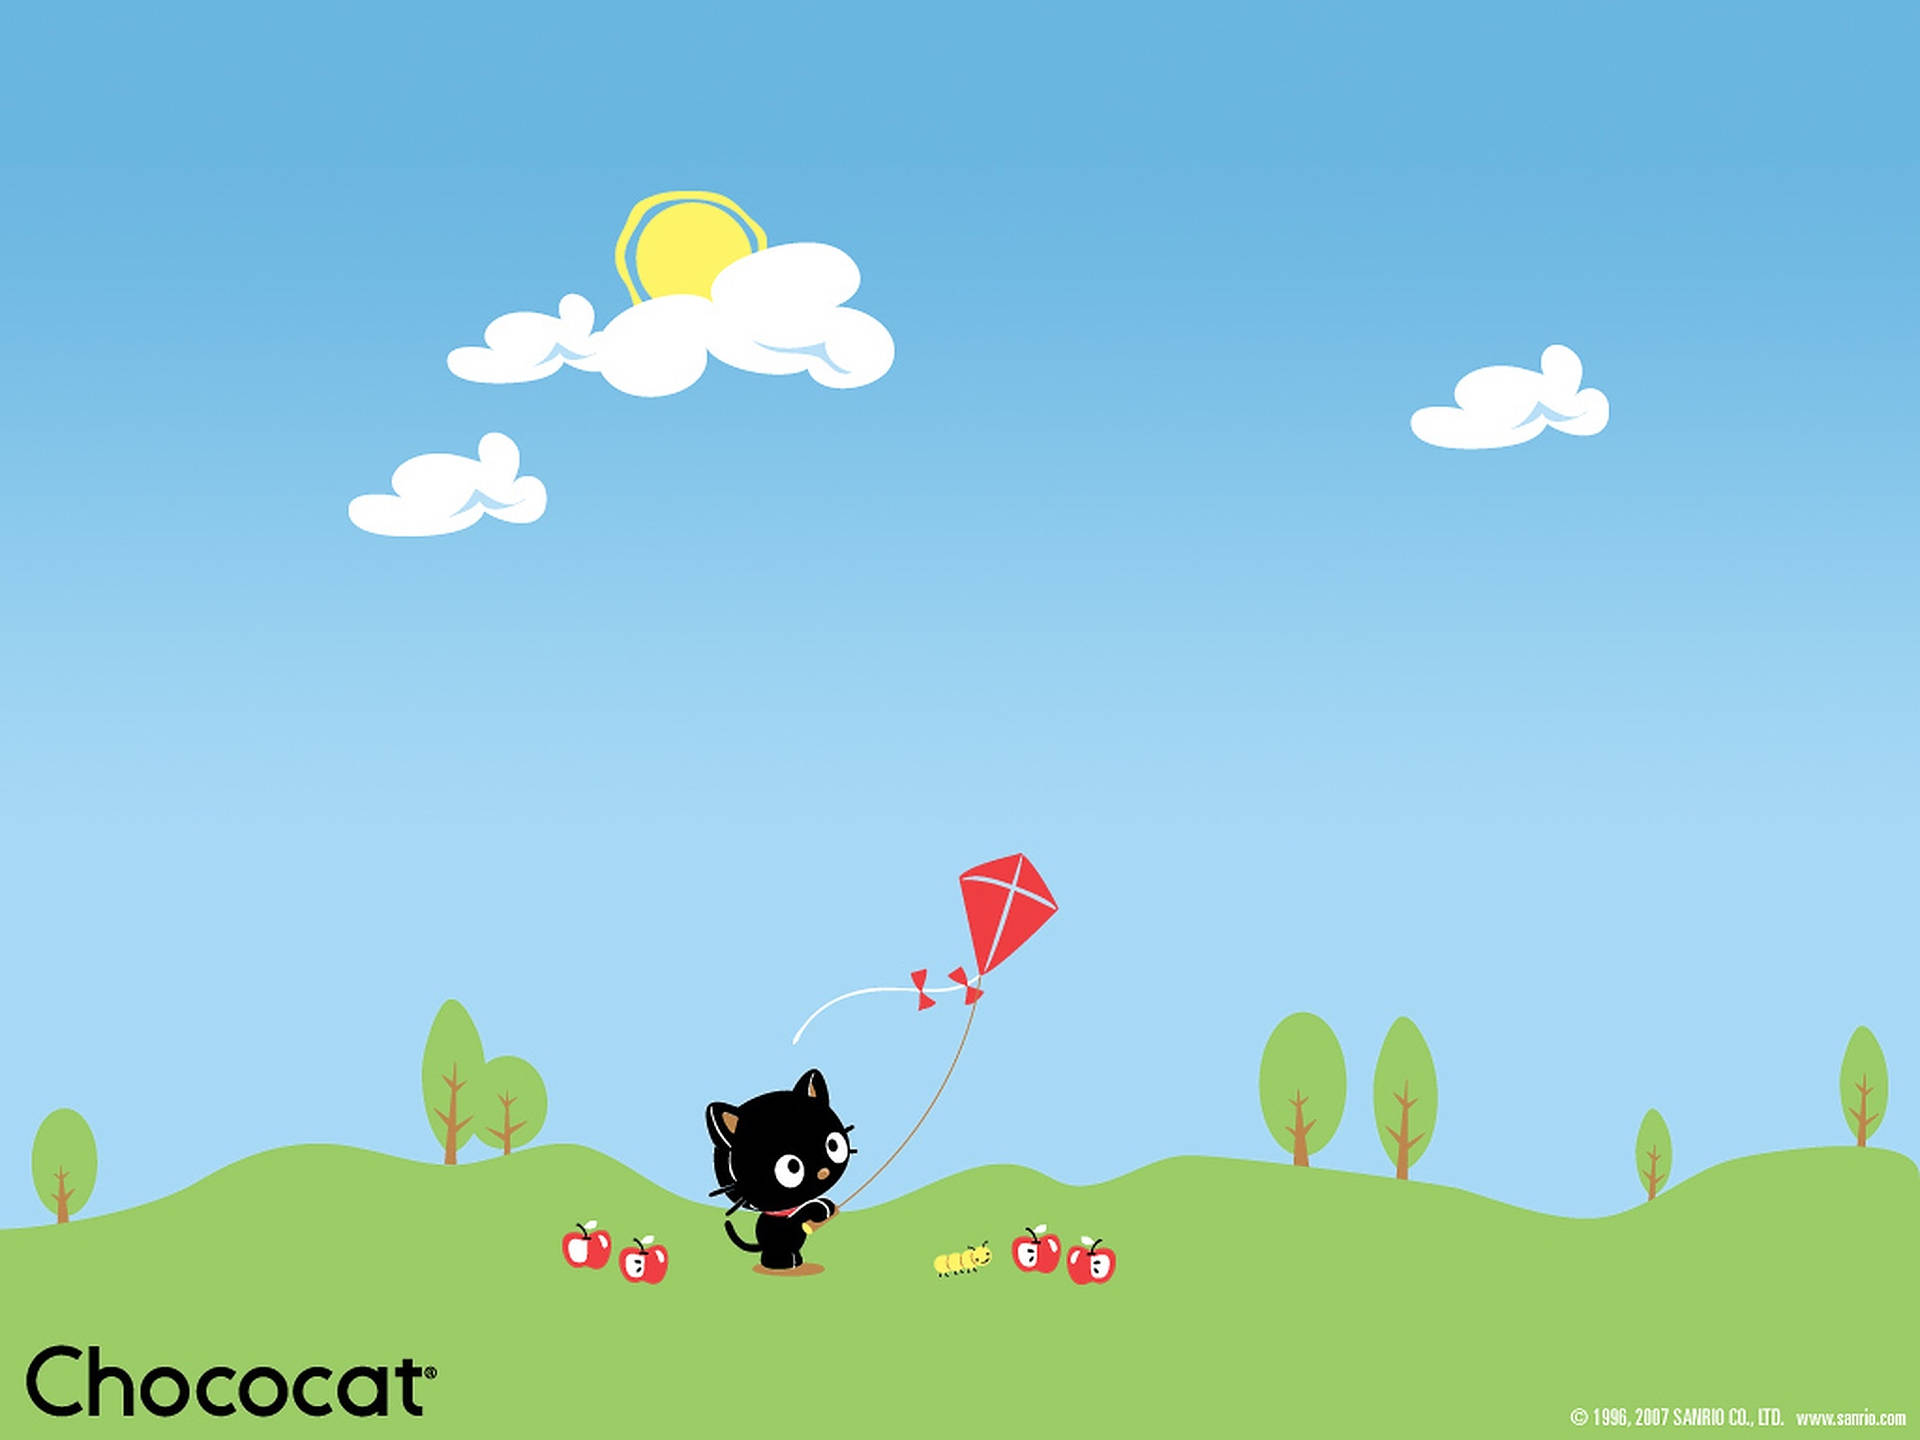 Chococat Flying A Kite Wallpaper